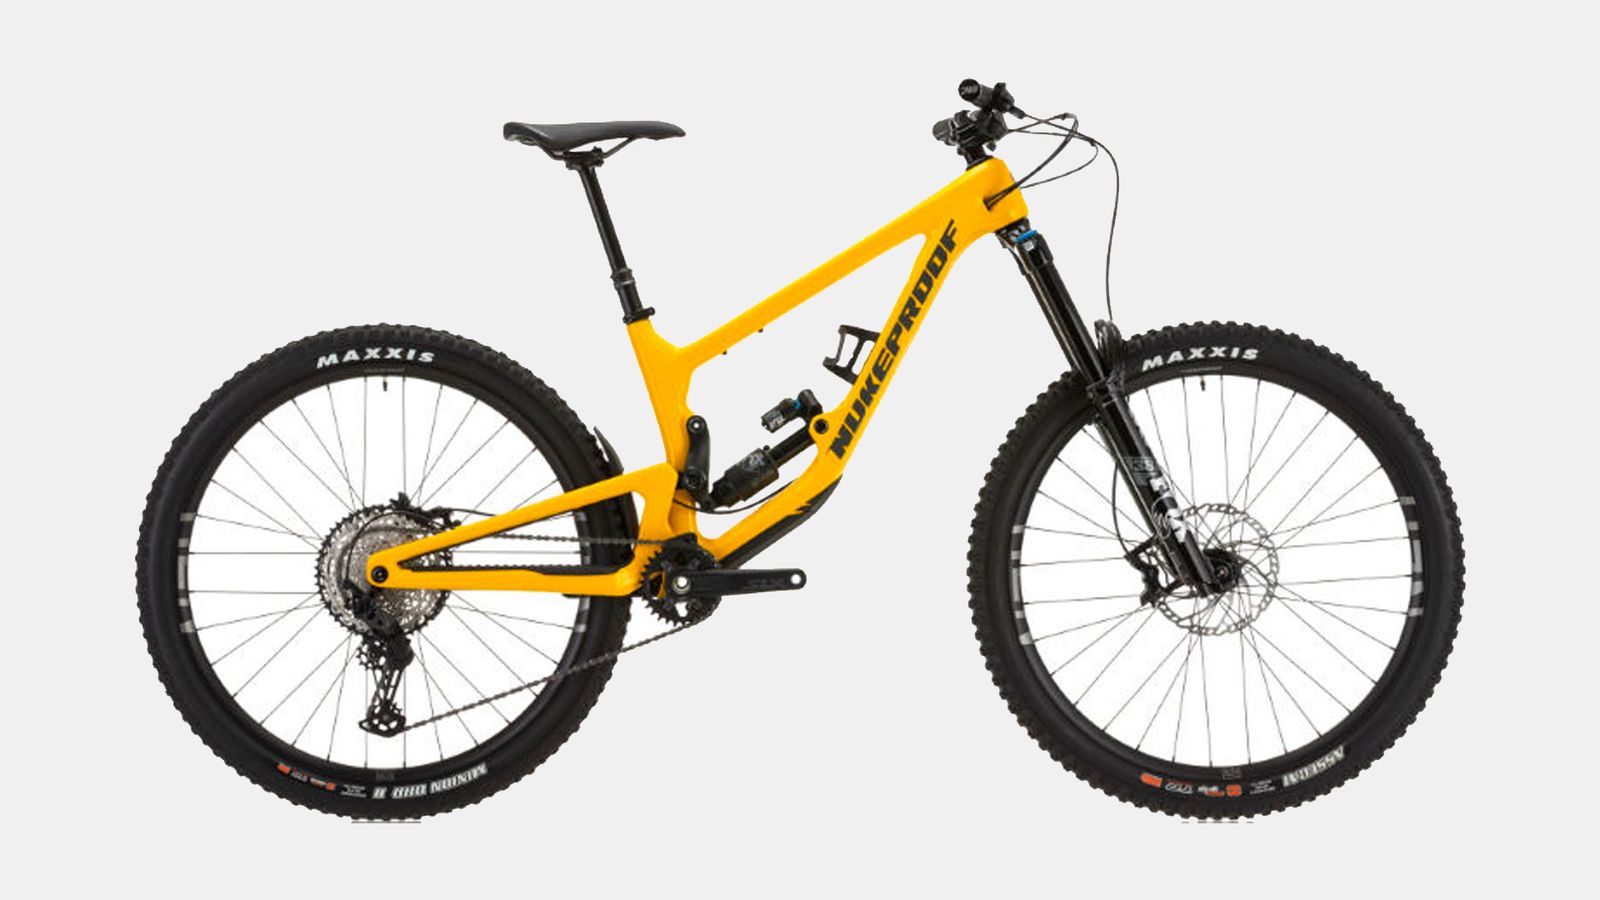 Best mountain bike Nukeproof product image of an all yellow mountain bike.